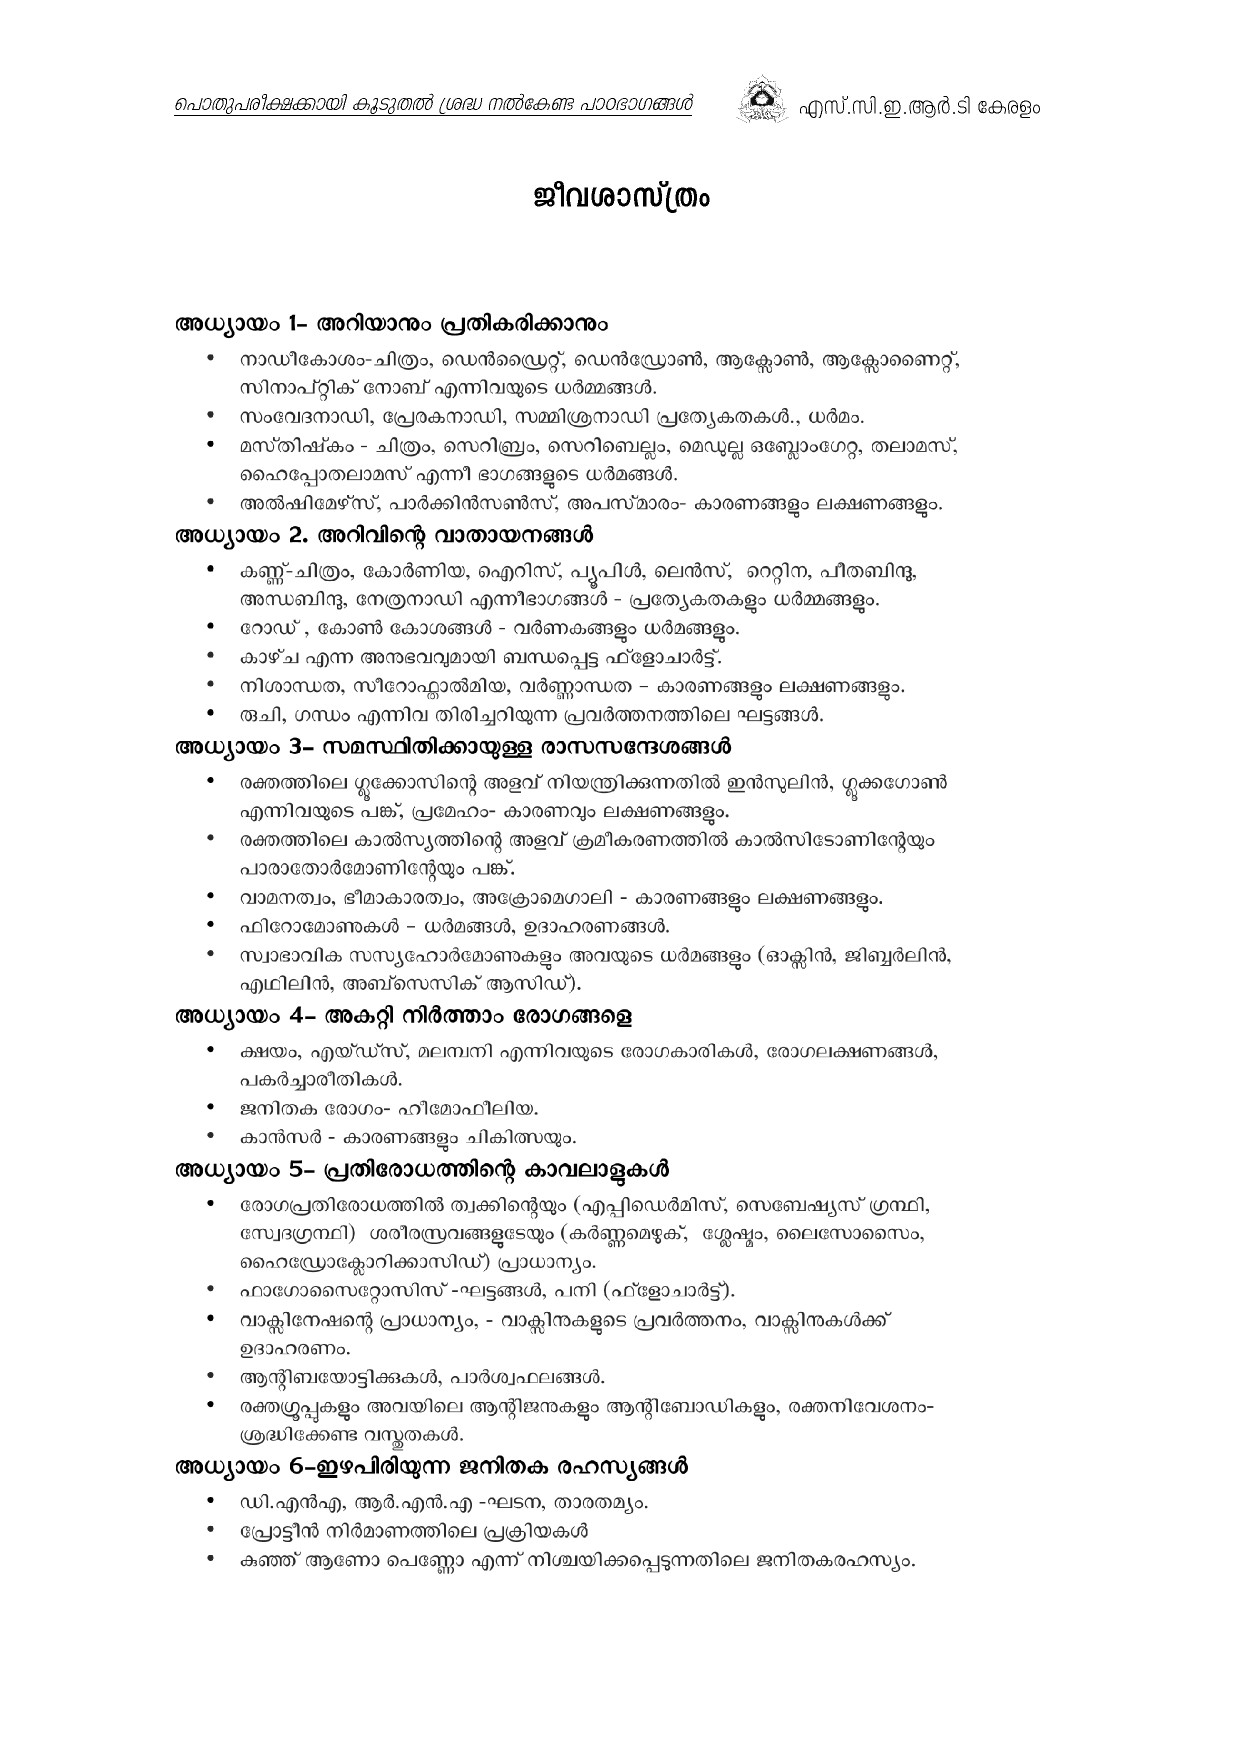 Kerala SSLC 2021 Focus Area - Notification Image 13